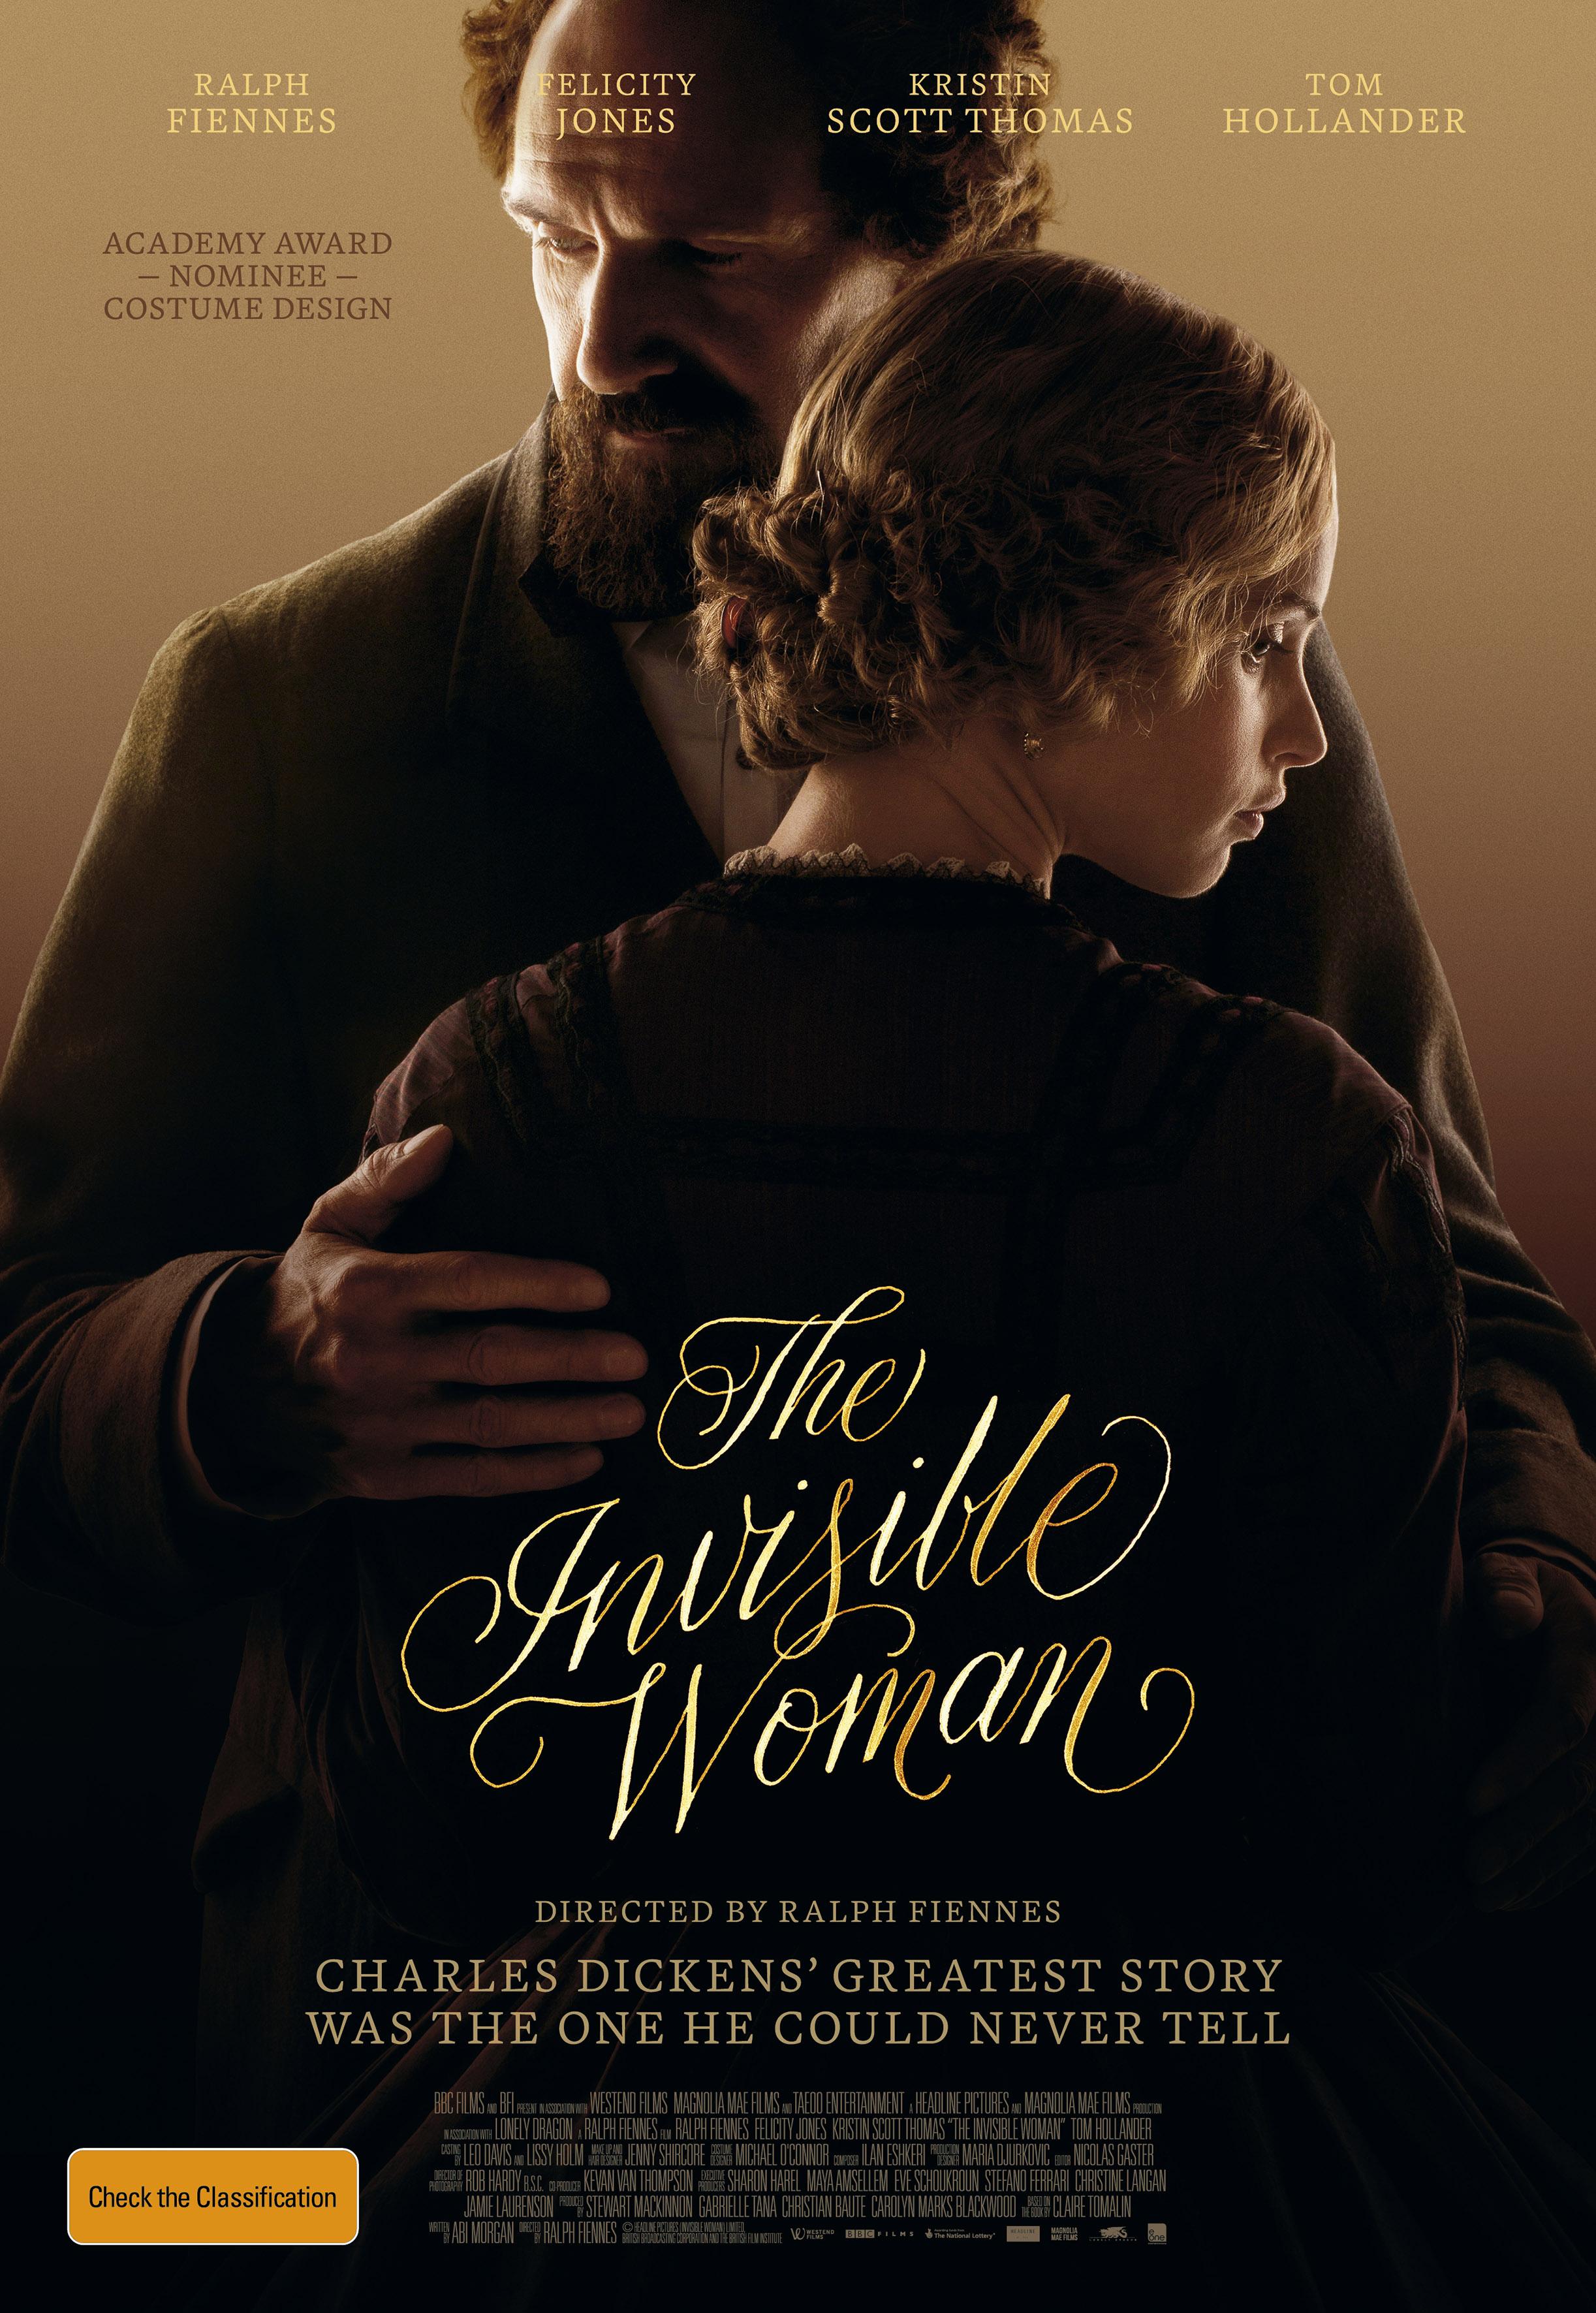 Постер фильма Невидимая женщина | Invisible Woman